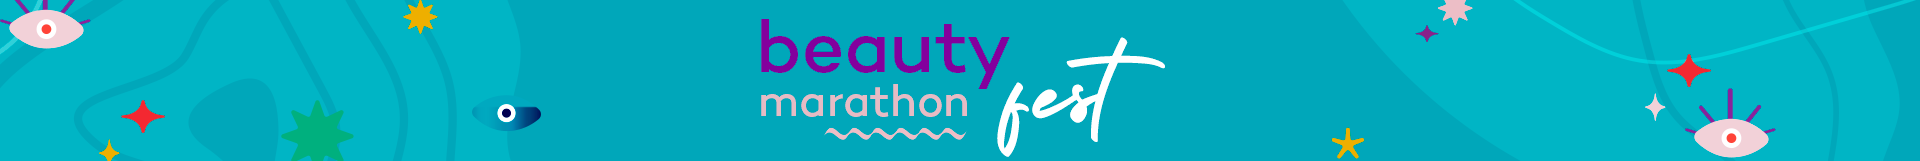 Header - Beauty Fest Marathon